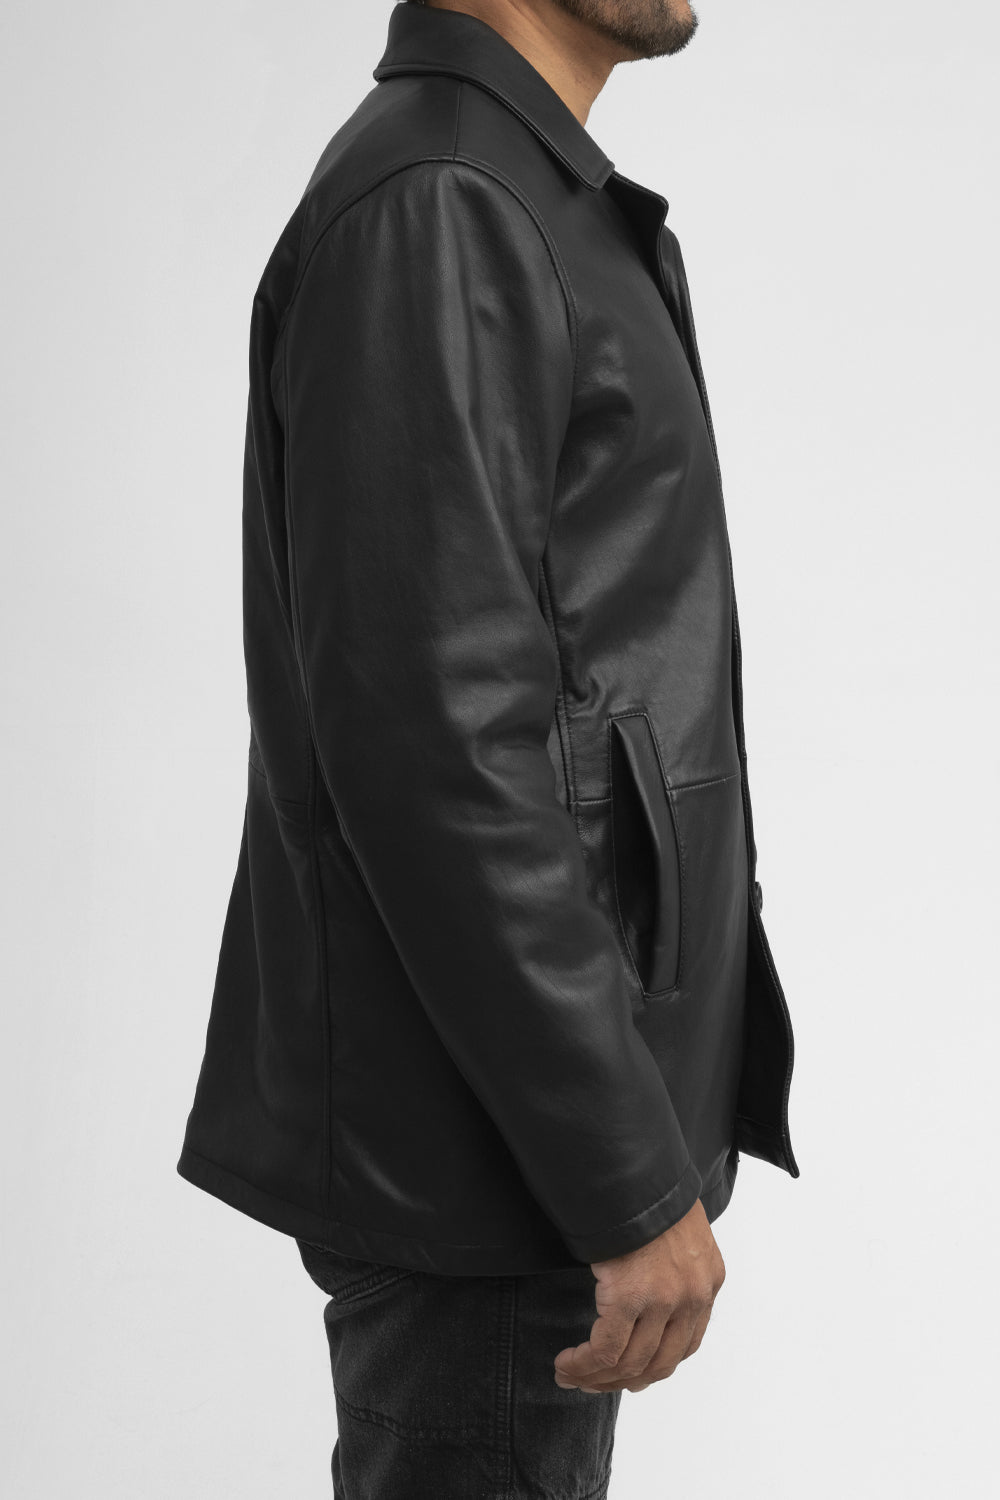 Strata Mens Fashion Leather Jacket Men's New Zealand Lambskin Jacket Whet Blu NYC   